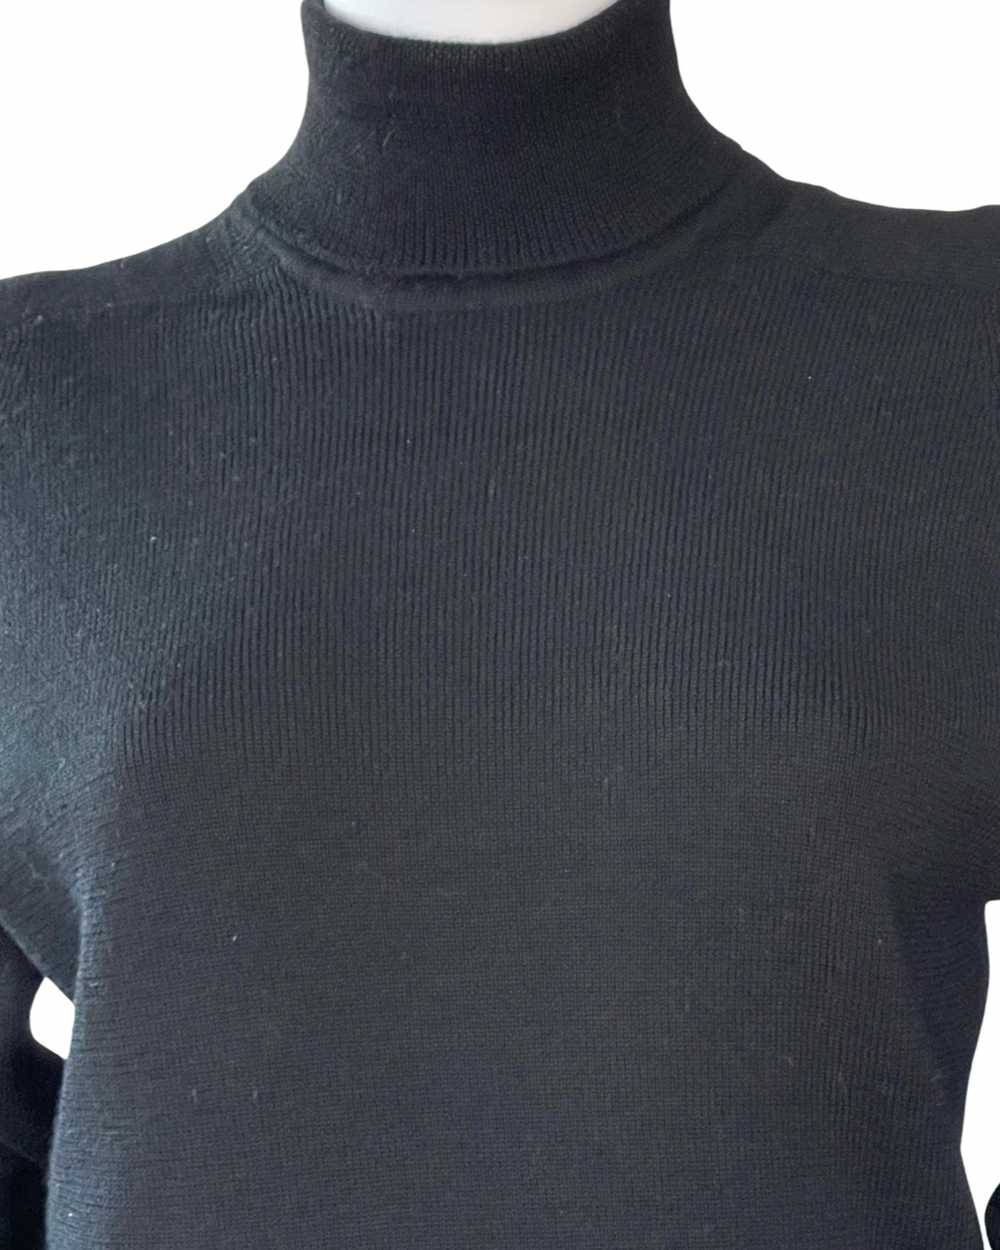 Vintage Emanuel Ungaro Turtleneck Sweater - image 2